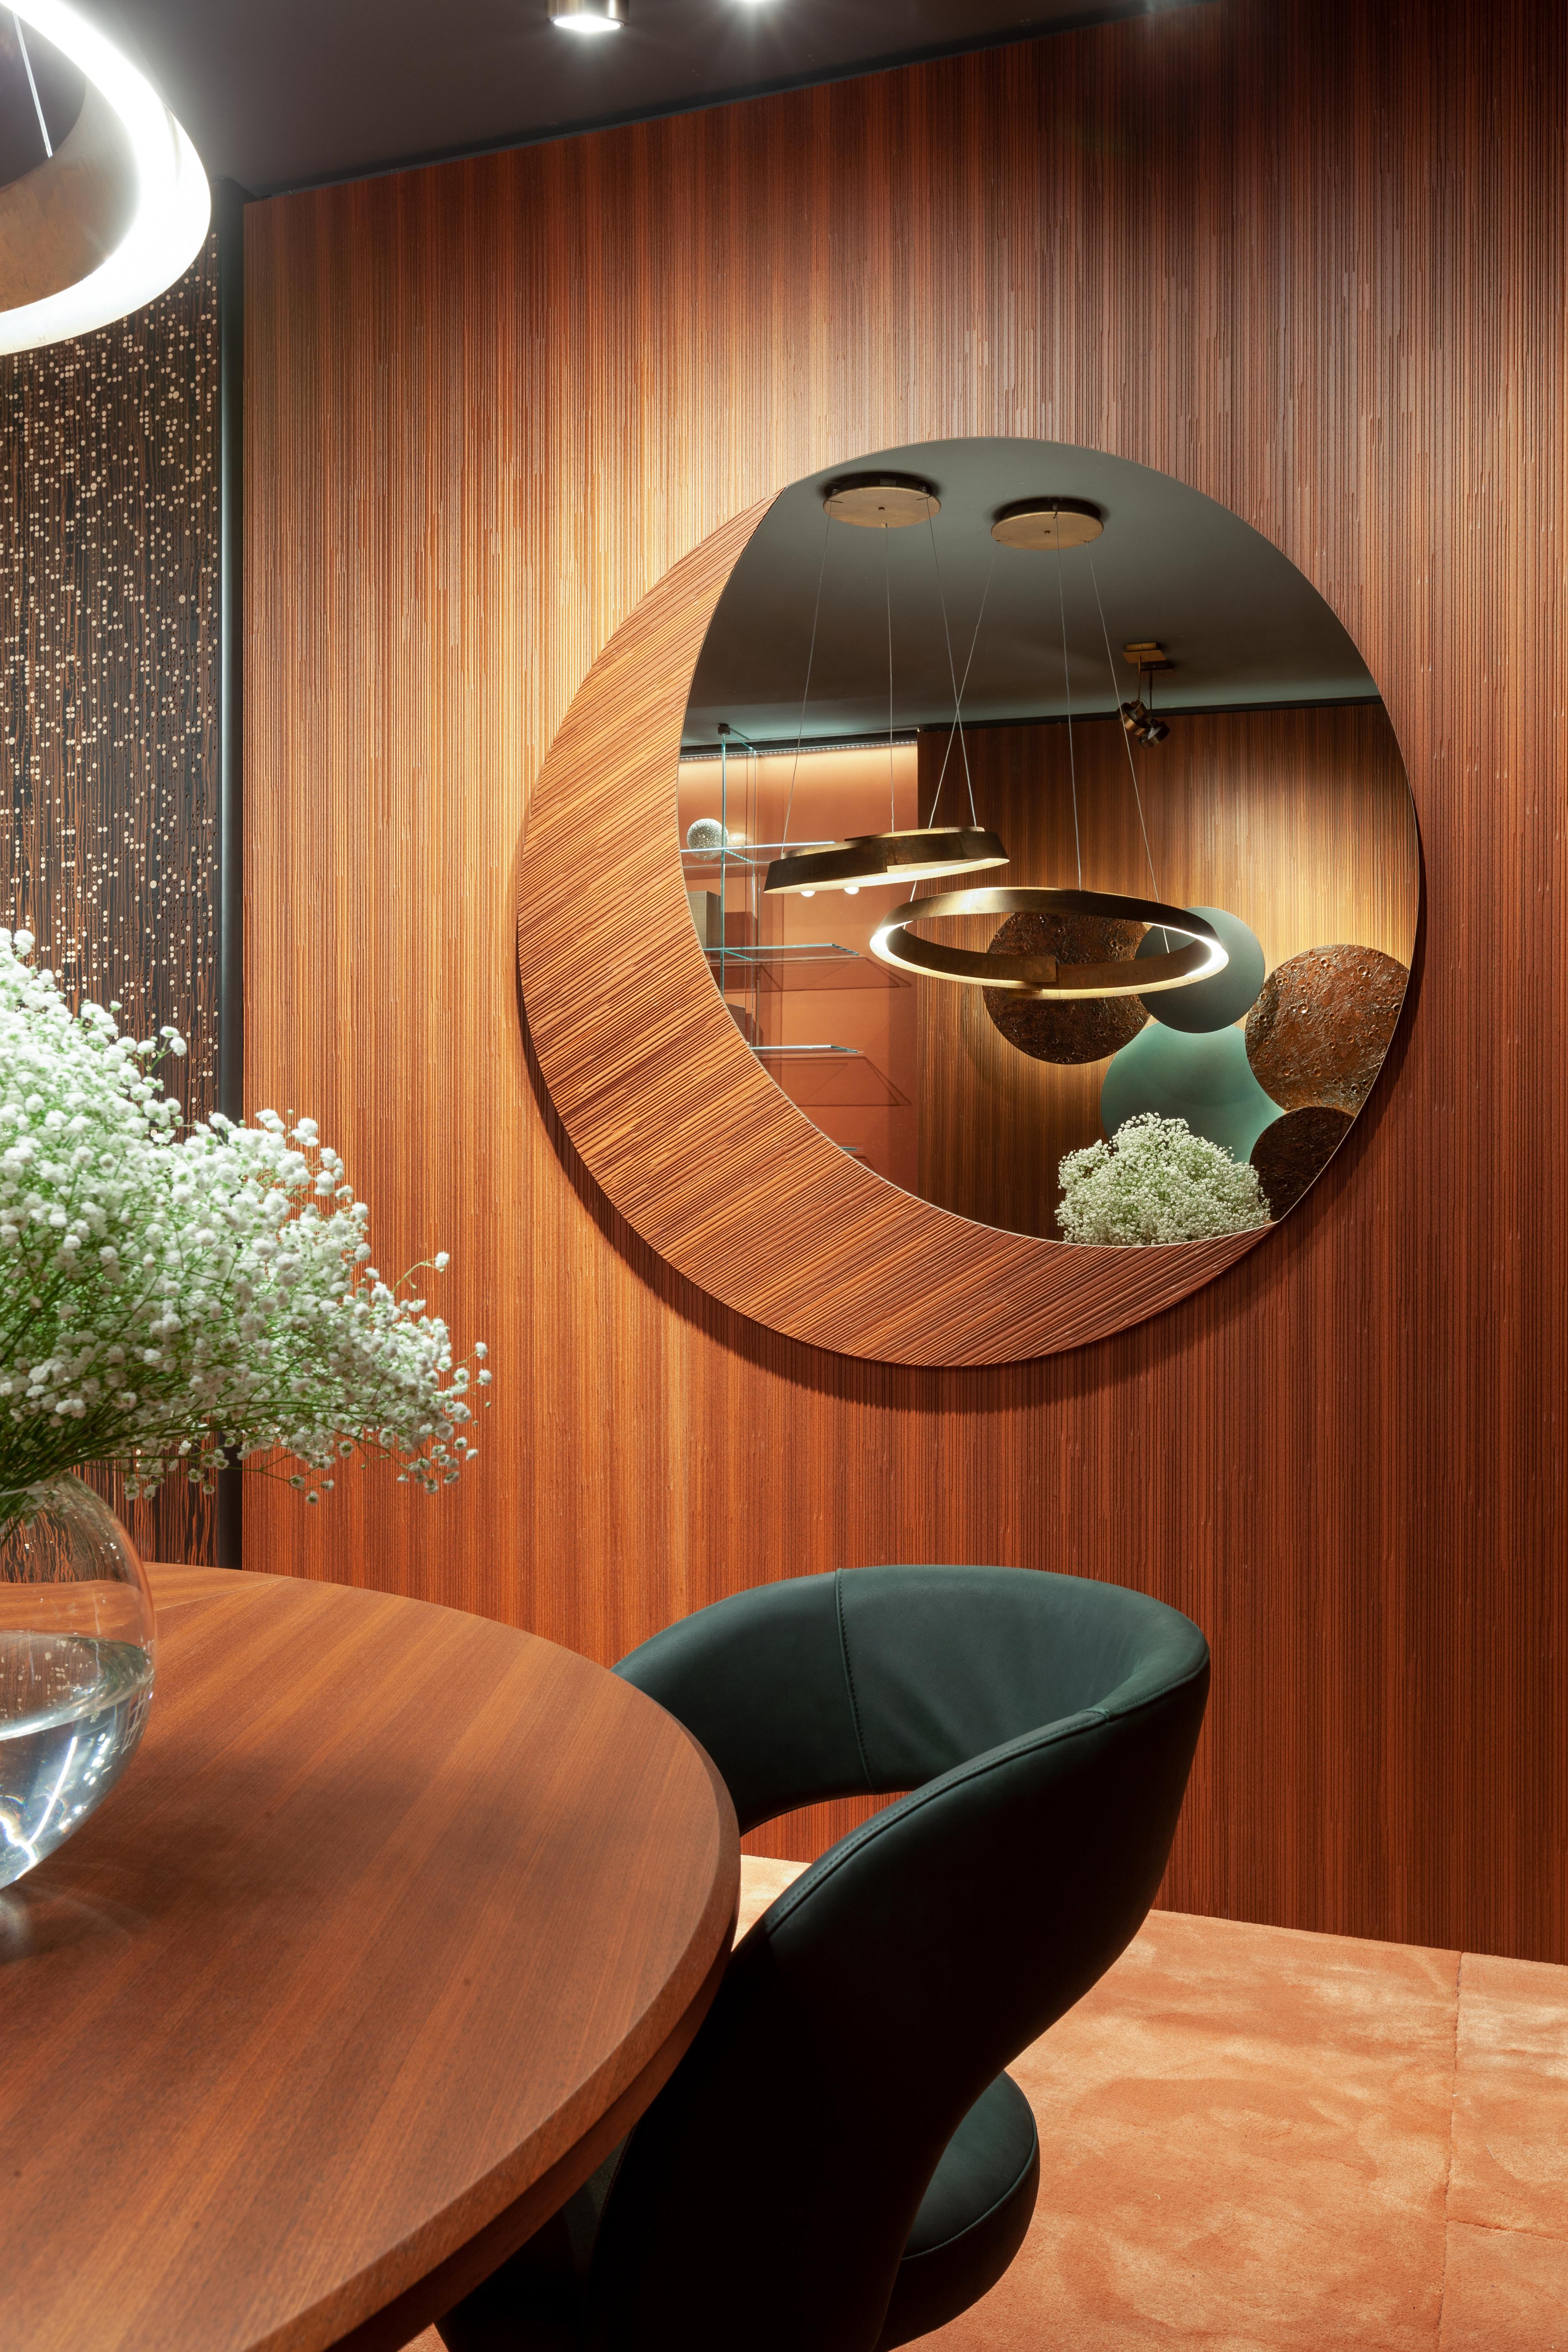 European Laurameroni Big Luxury Mirror in Wood with 